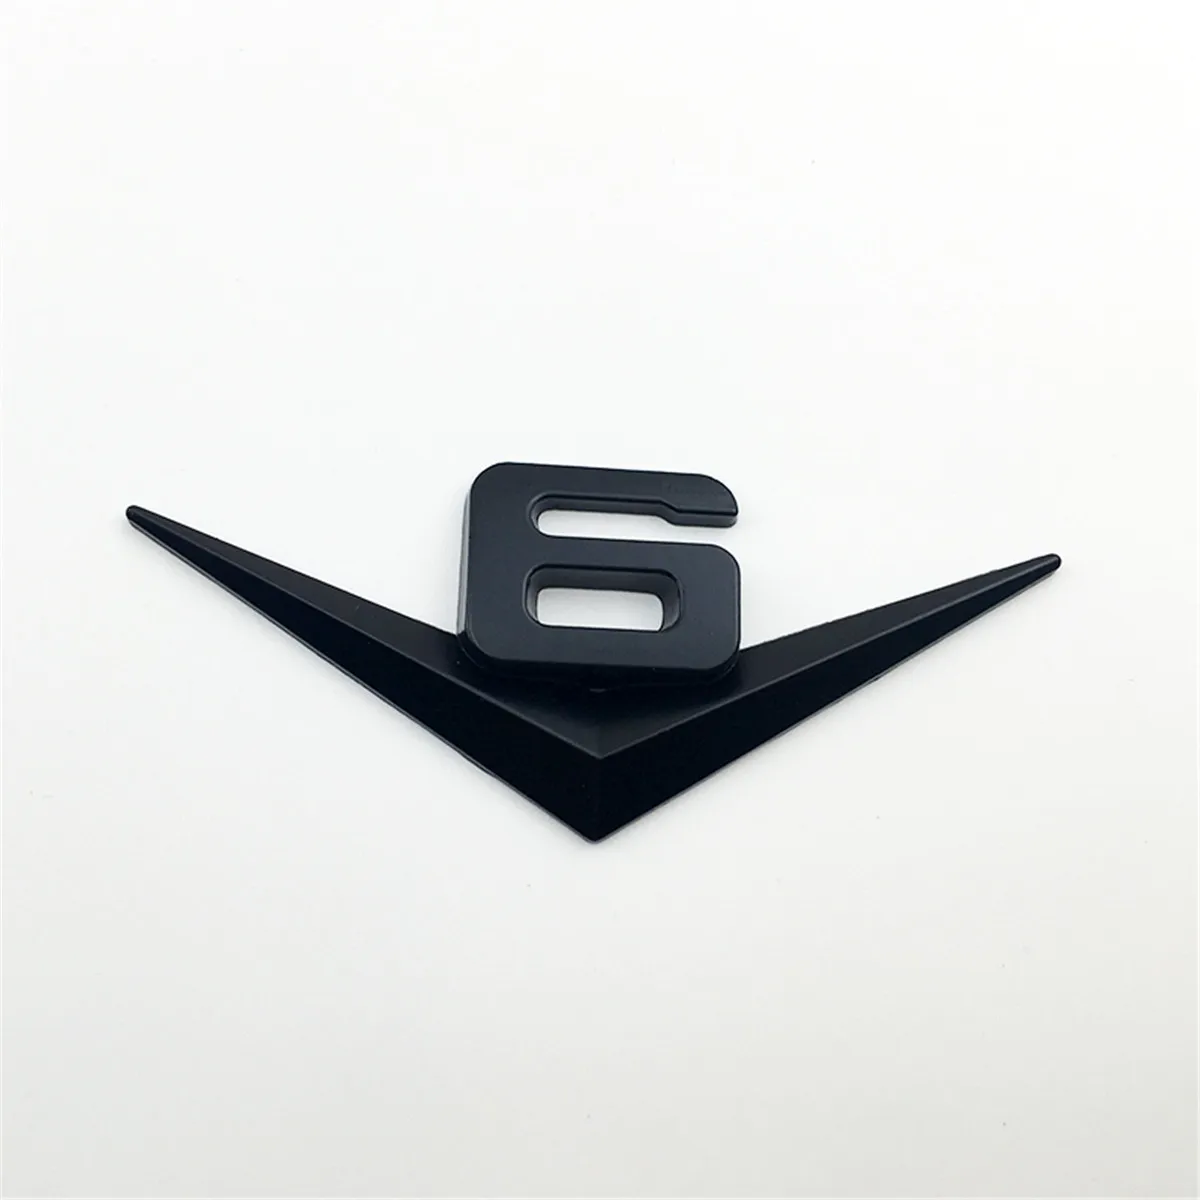 3D Chrome Vehicle Metal Letter Logo Emblem Badge Truck Decal Sticker Car Parts Accessories Universal Trim Black Silver